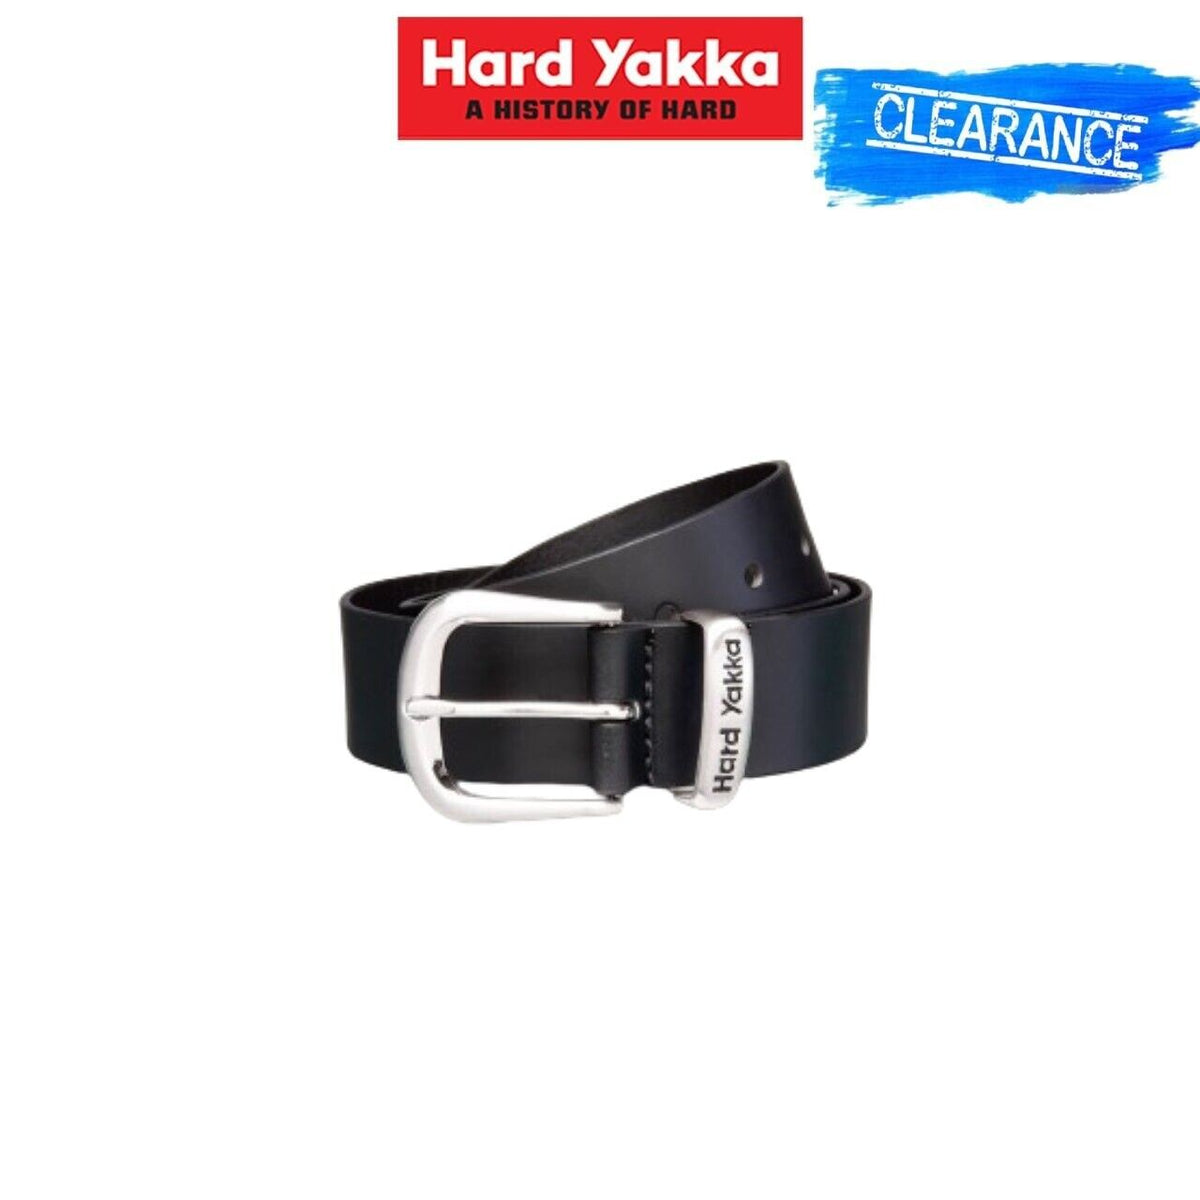 Clearance! Hard Yakka Mens Belt Leather Satin Nickel Buckle Work Black Y09402